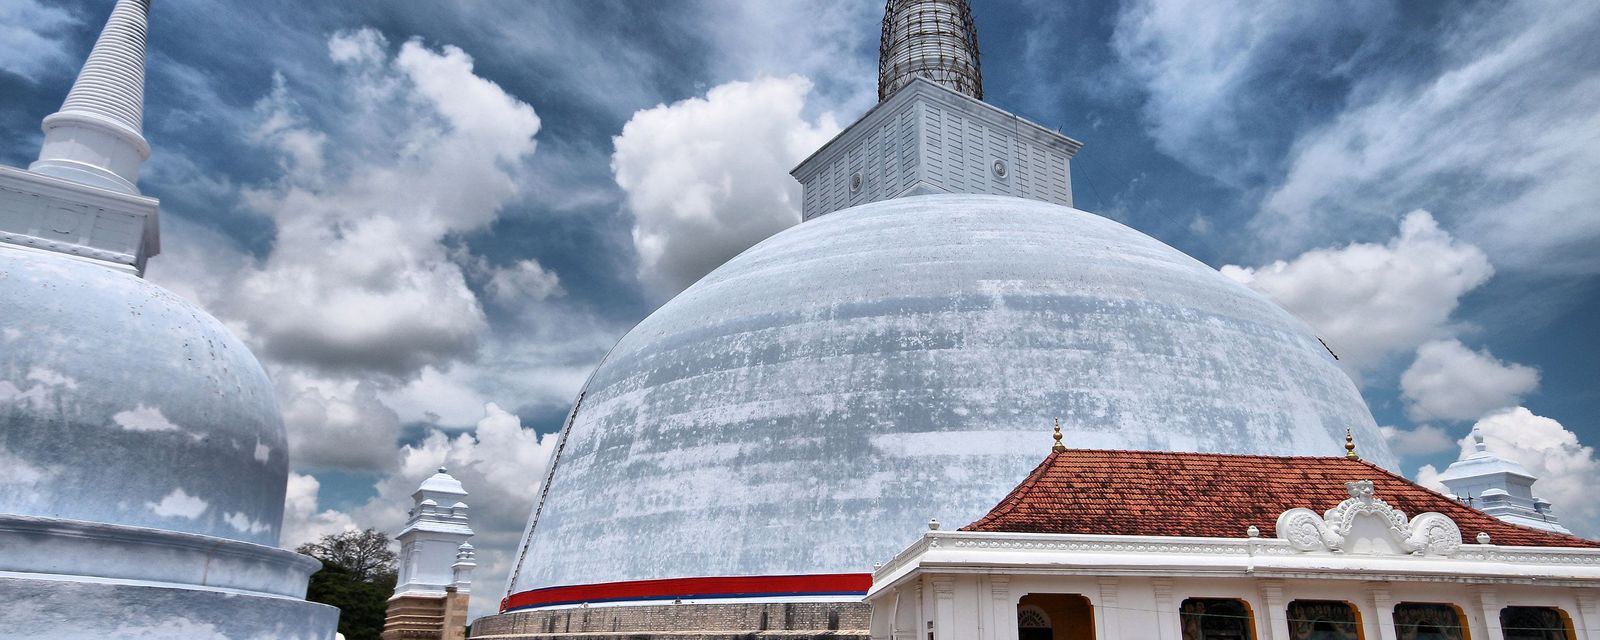 Sri Lanka's sacred city of Anuradhapura was the first established kingdom on the island (Credit: Credit: AnaG/Getty Images)